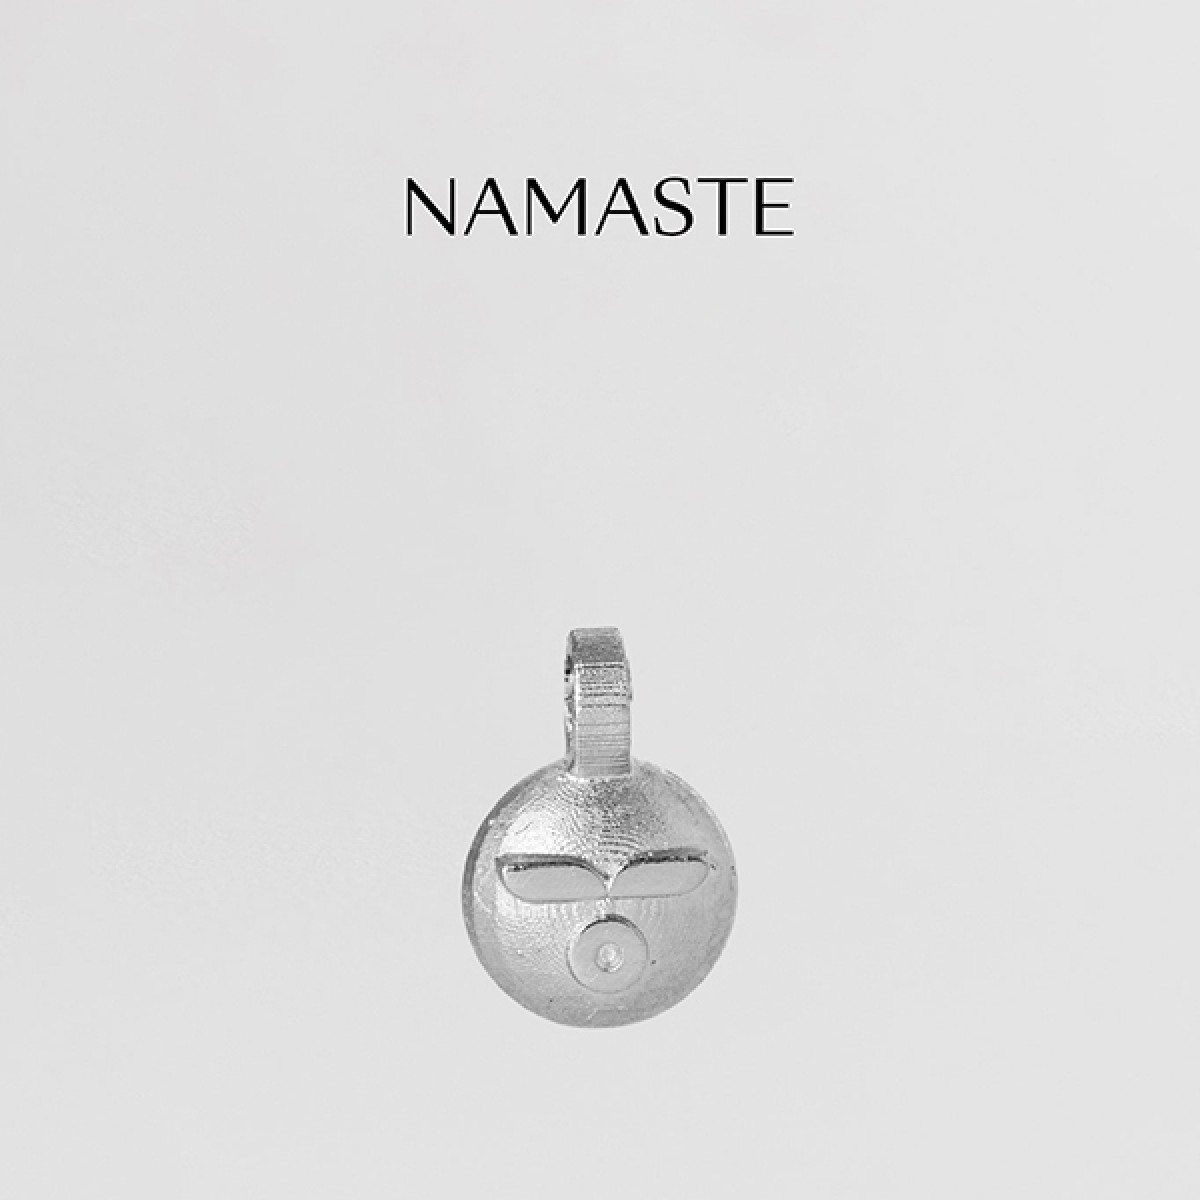 related by objects - vibe necklace - namaste - 925 Sterlingsilber - feinversilbert 